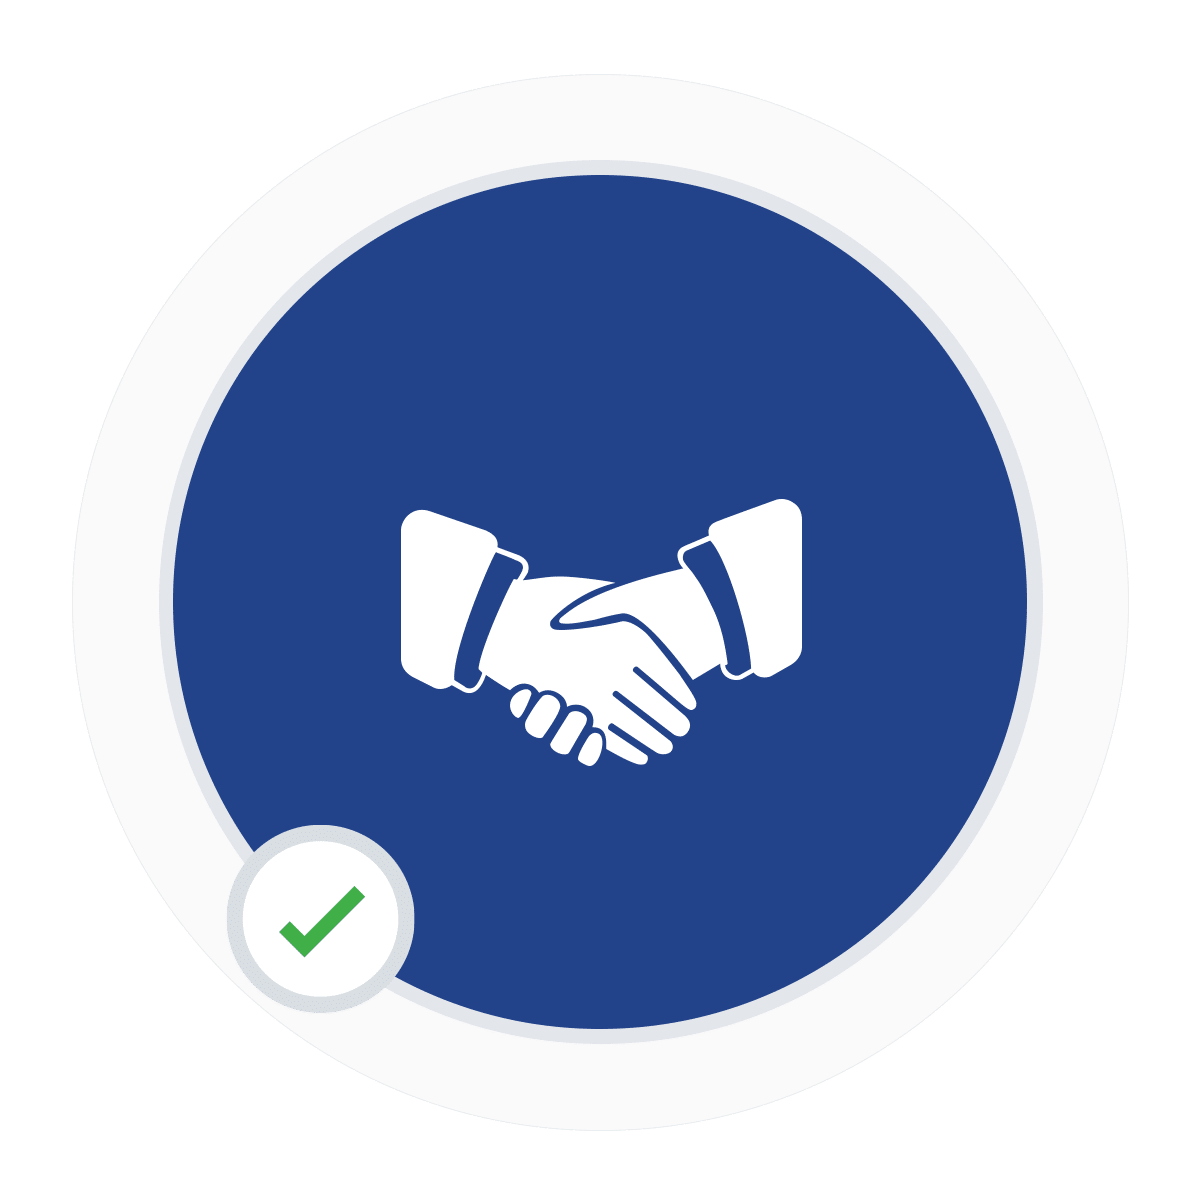 Partnership Approach